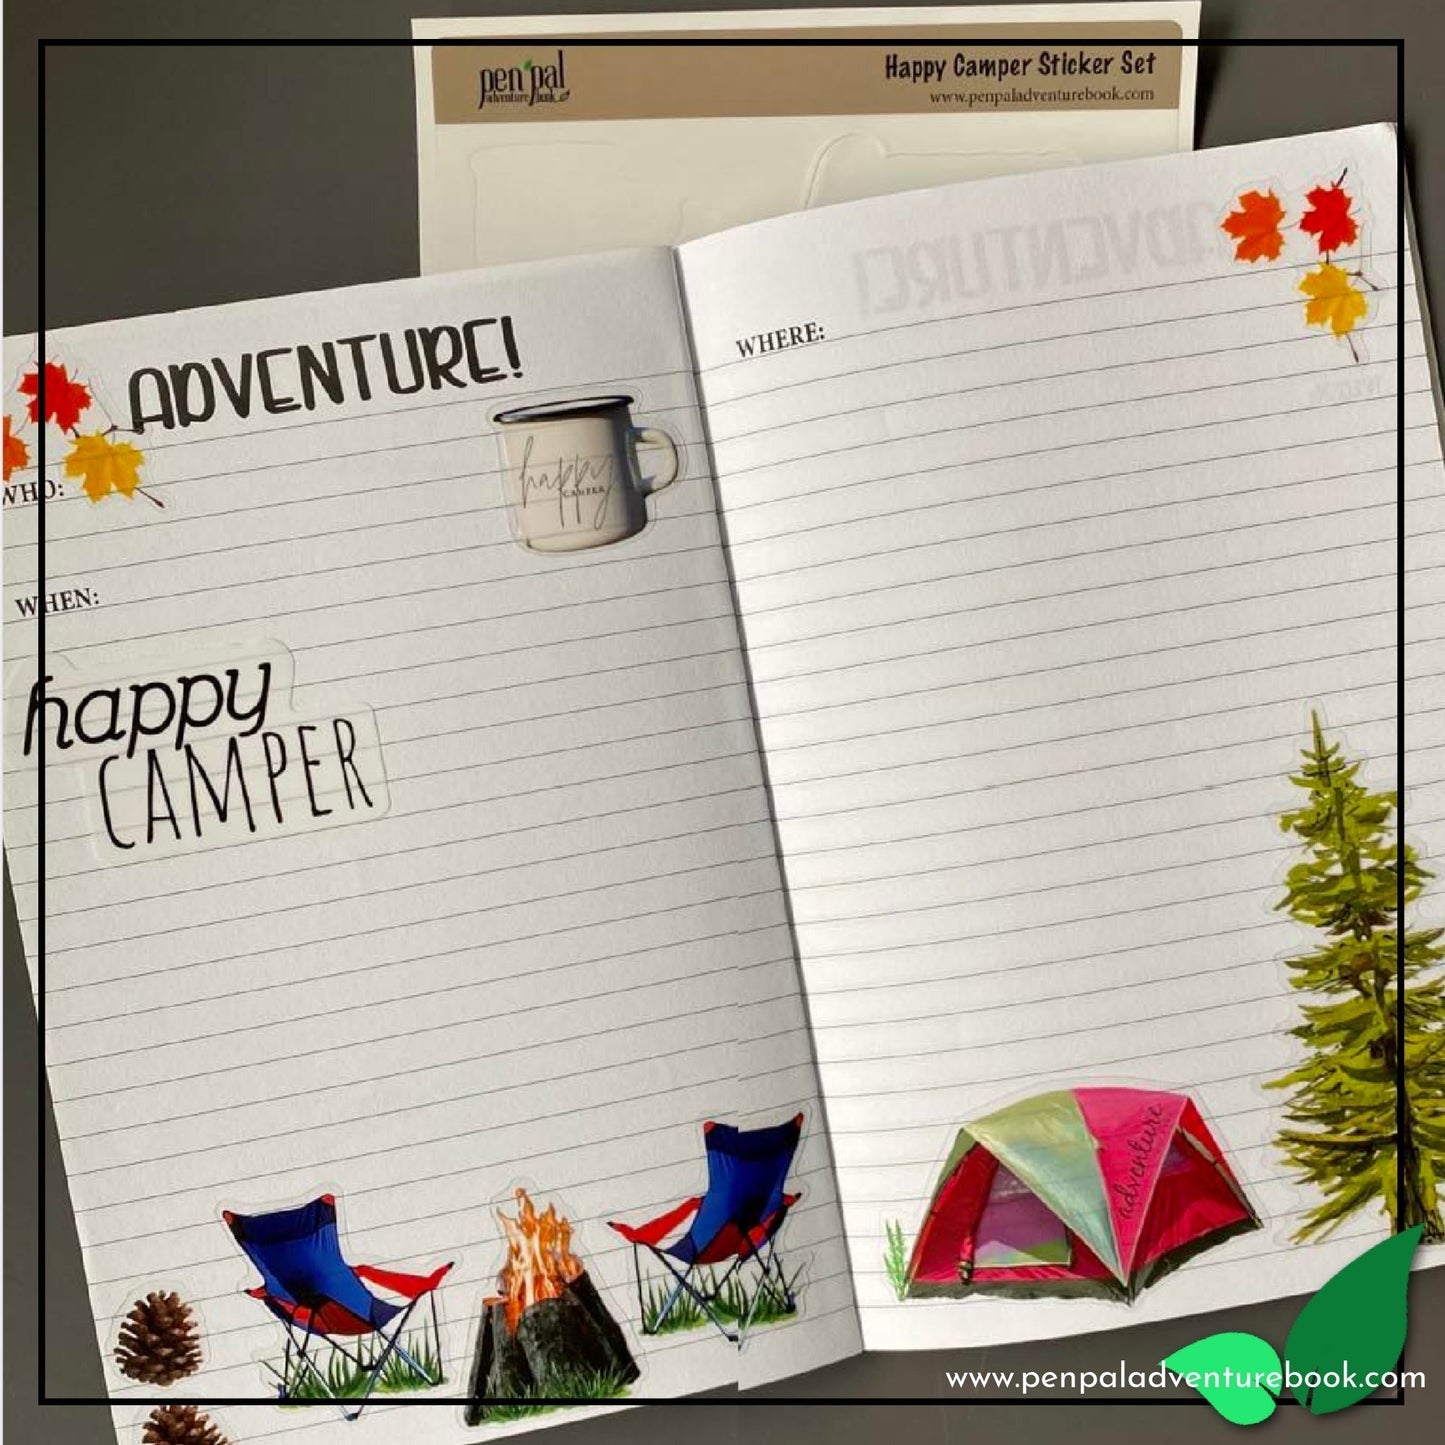 Seek Everyday Magic - Gift Set with Pen Pal Adventure Journal & Happy Camper Sticker Set